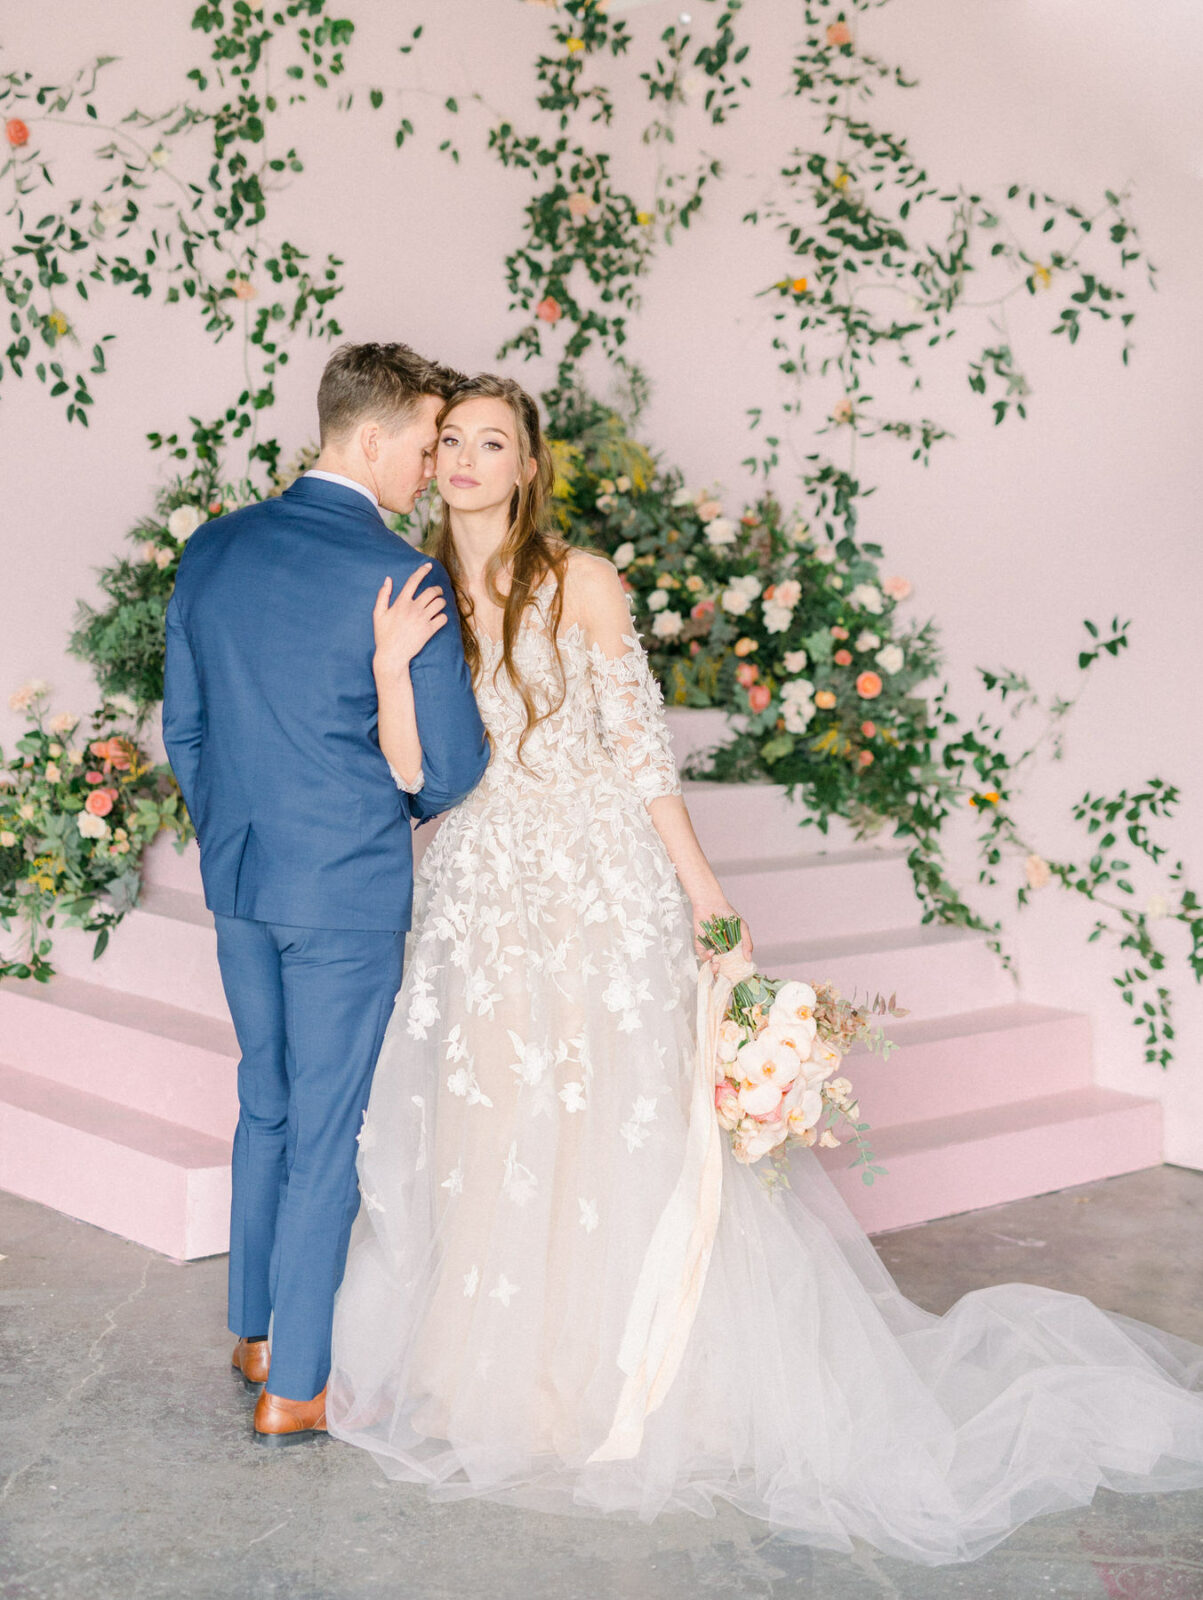 Pastel and Blush wedding inspiration with a gorgeous Oscar De La Renta gown. Colorful wedding inspiration at The Doyle Las Vegas.